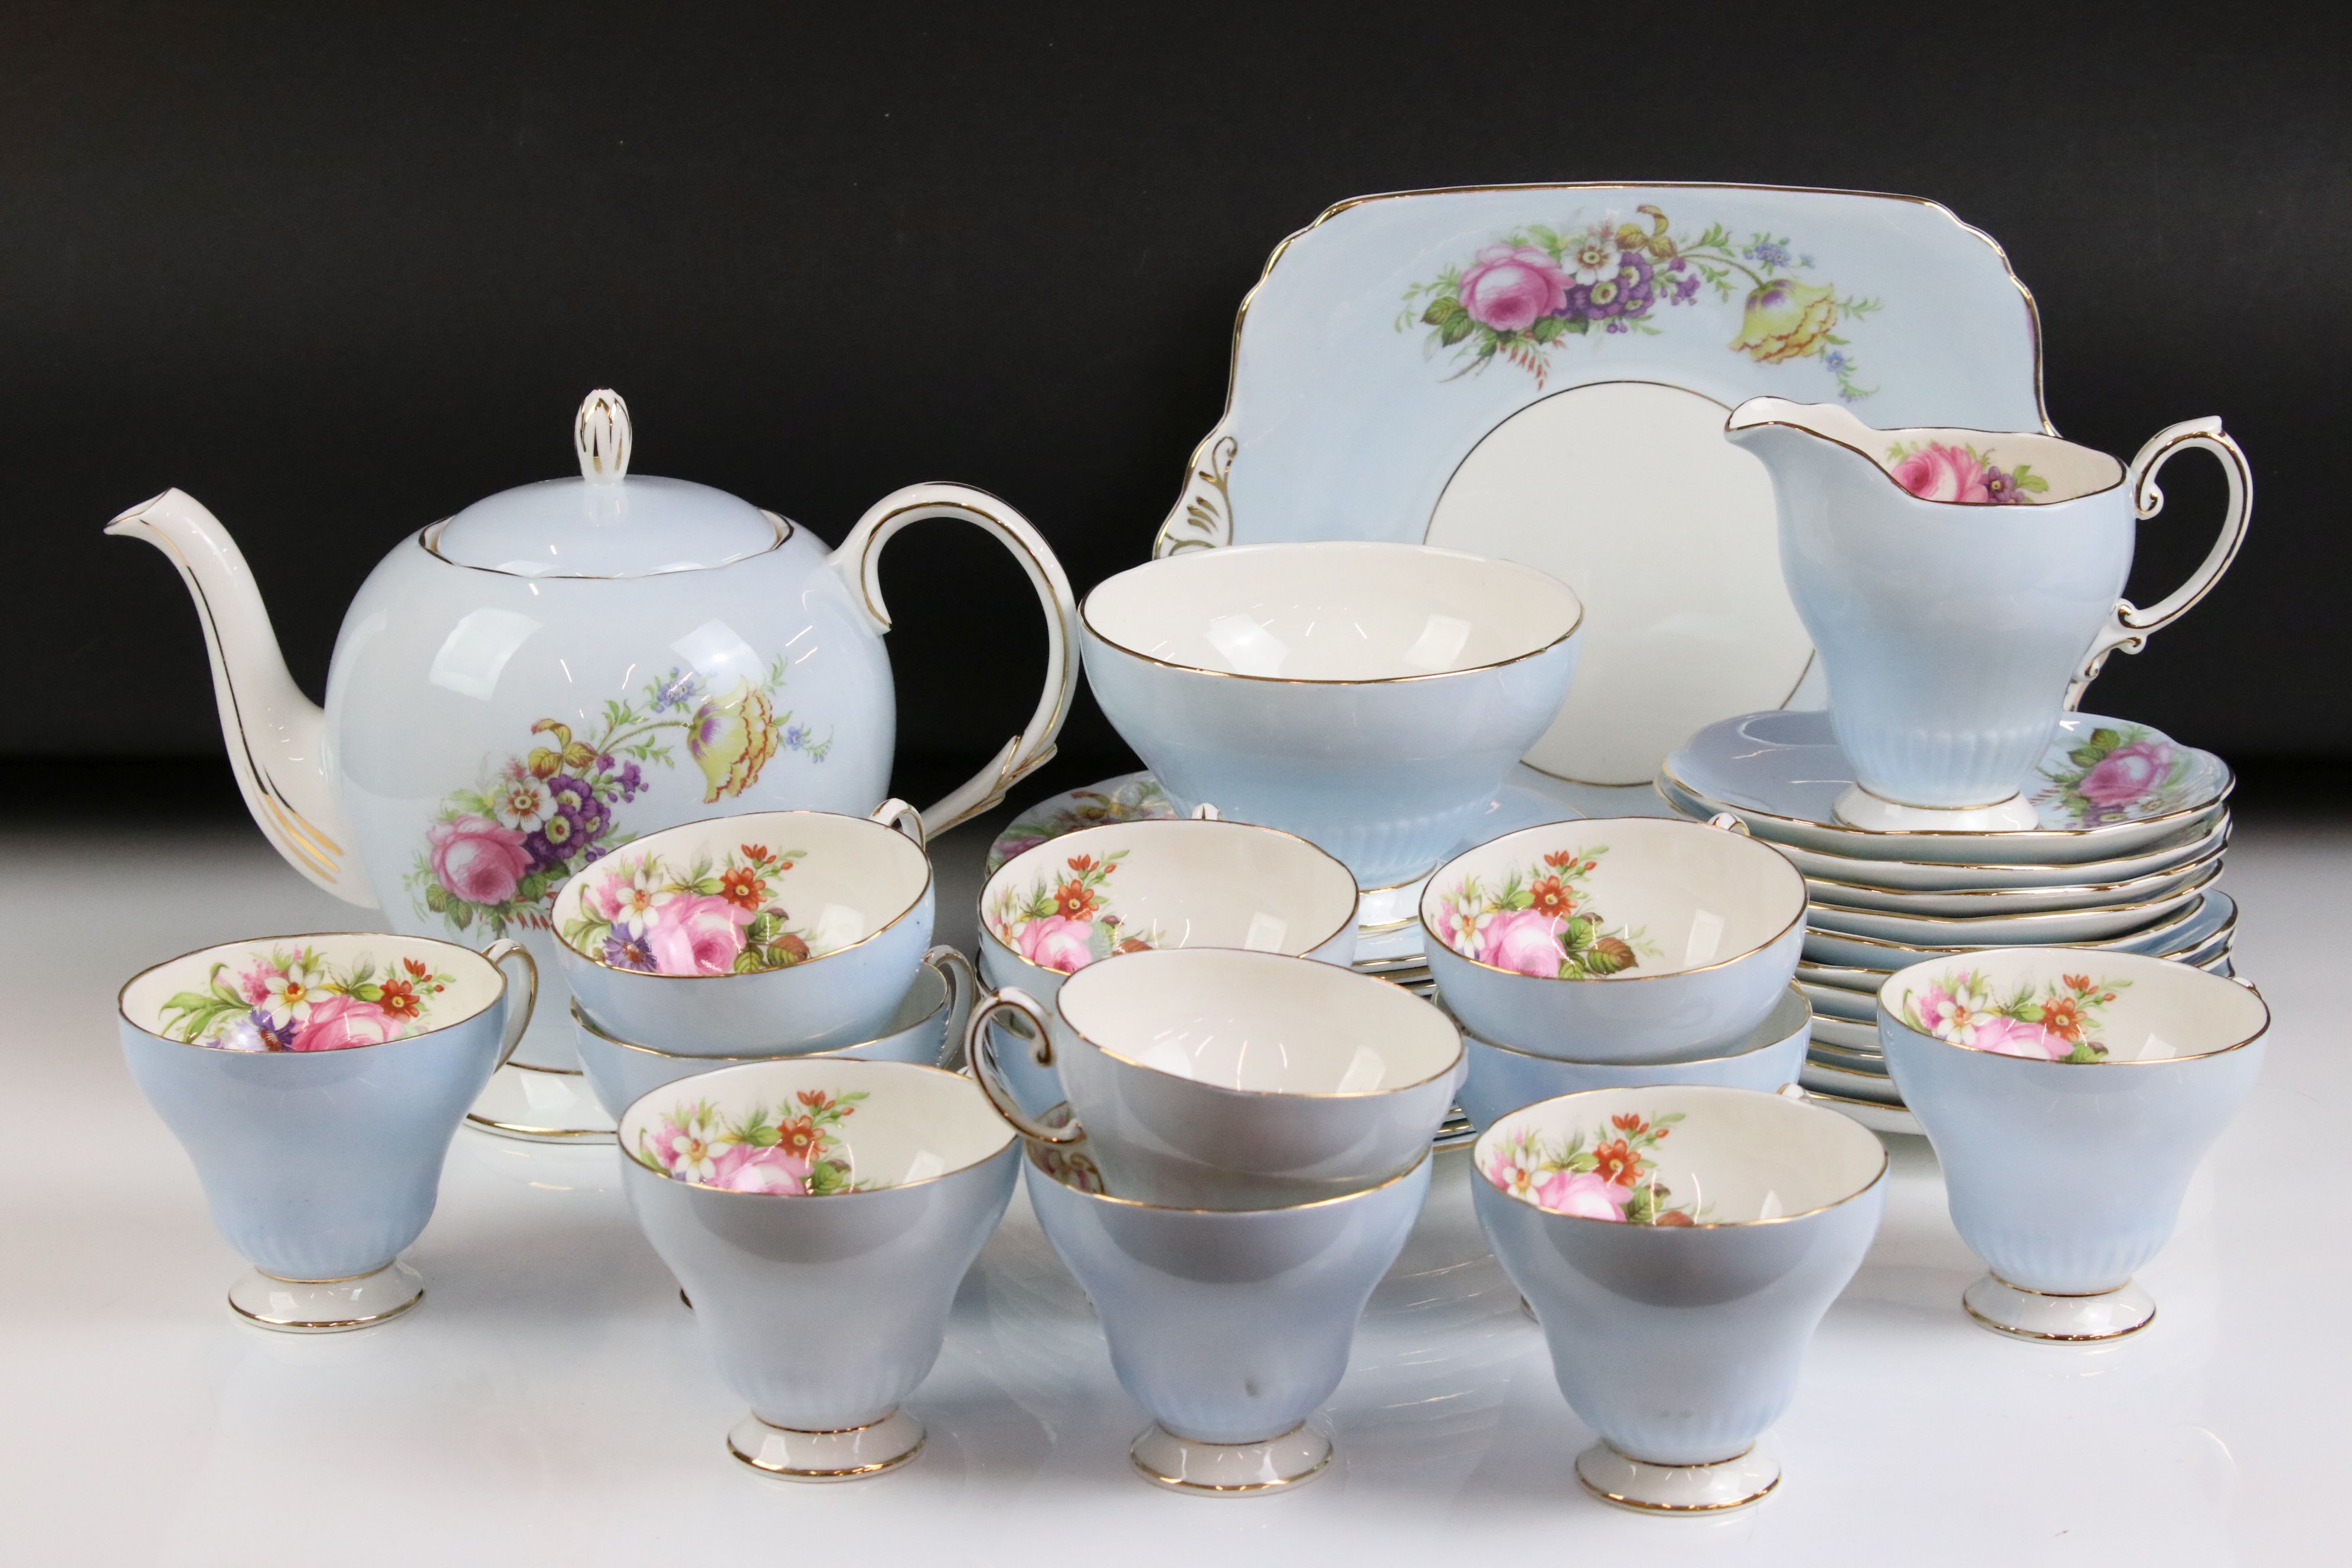 Foley floral tea set in pale blue (pattern 3125) comprising of a teapot & cover, 12 teacups, 11